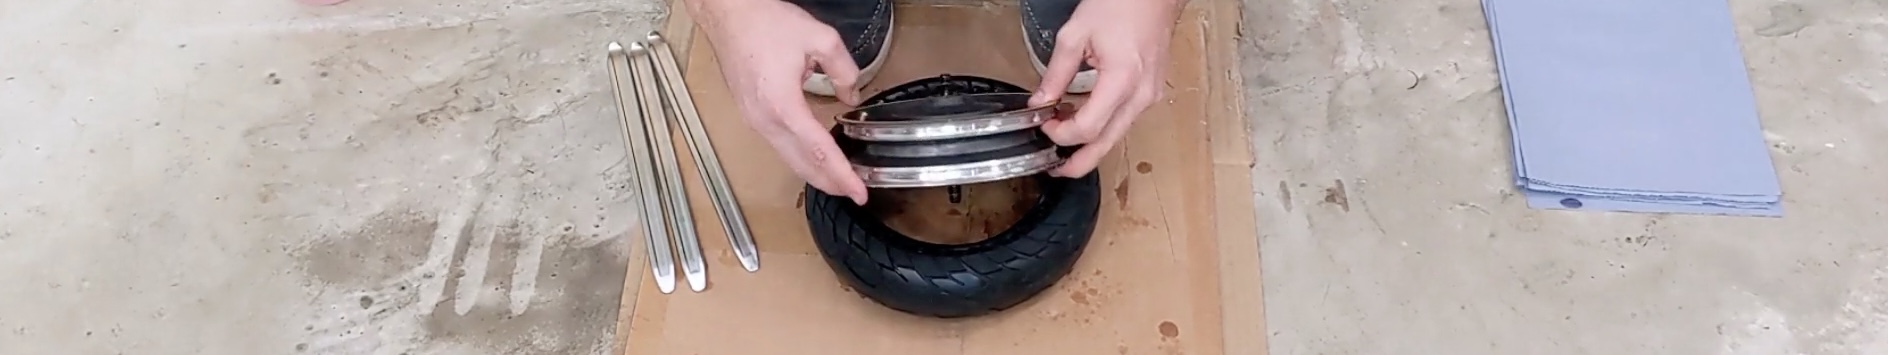 Installation pneu increvable